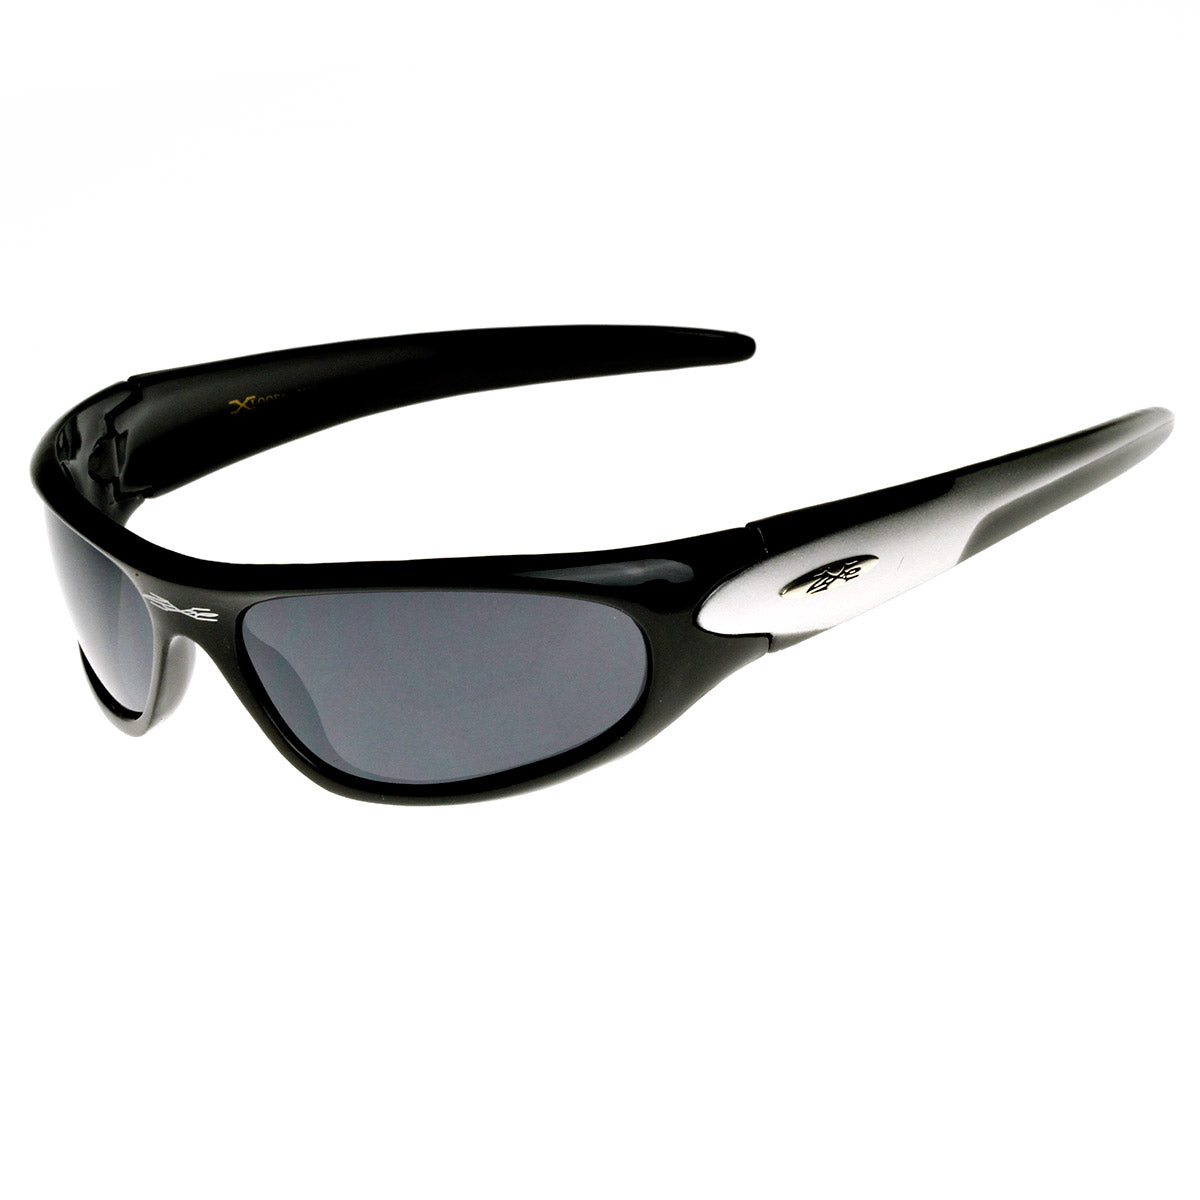 X-Loop Brand Two-Tone Wraparound Sports Sunglasses - sunglass.la